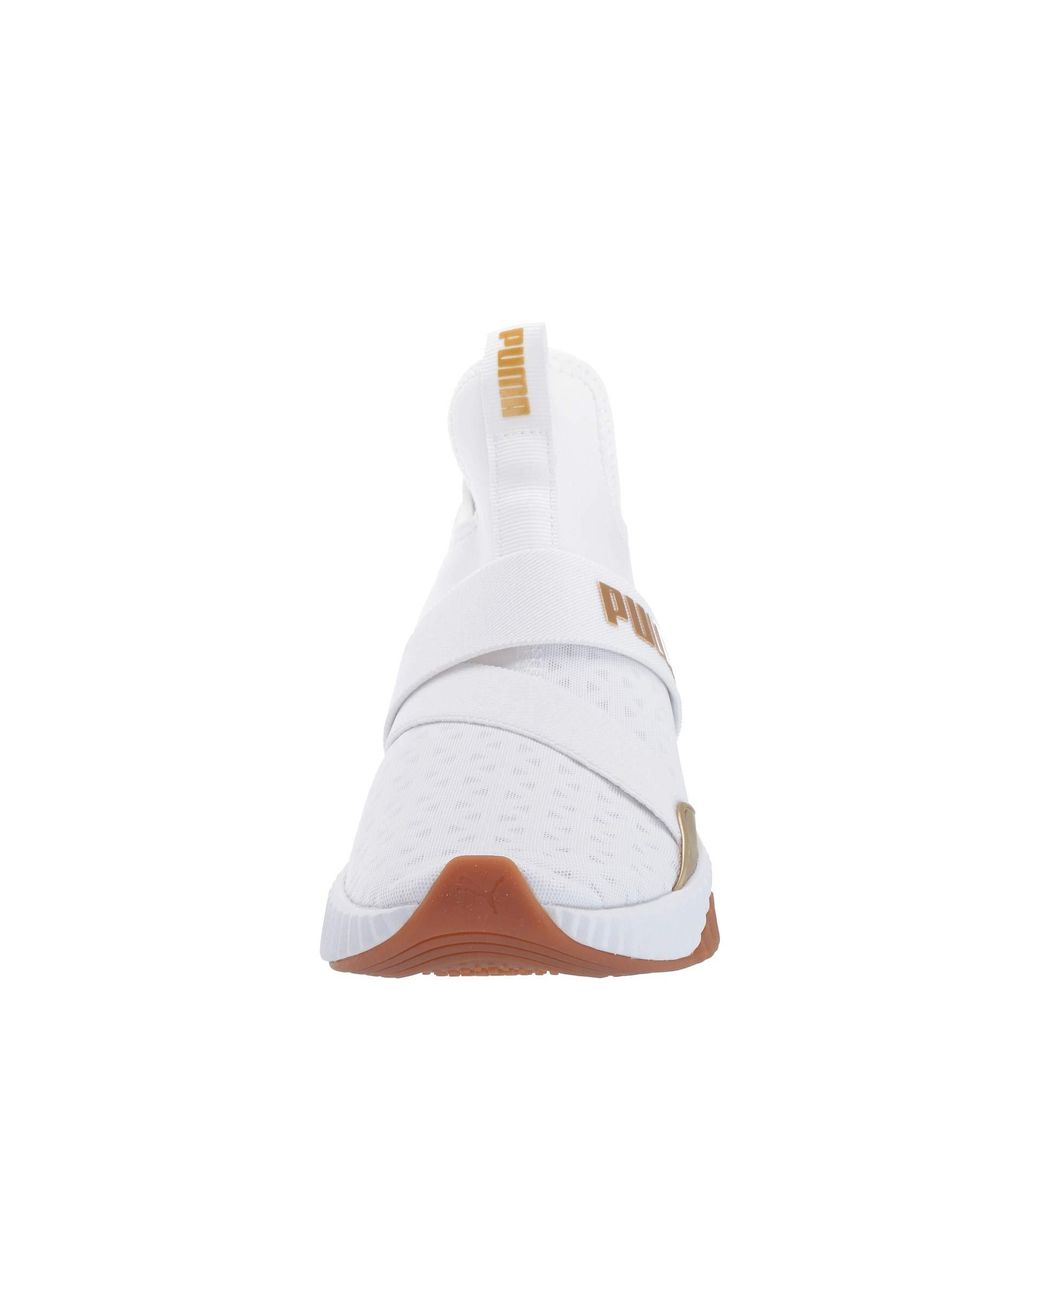 PUMA Defy Mid Sparkle ( White/metallic Gold) Women's Shoes | Lyst